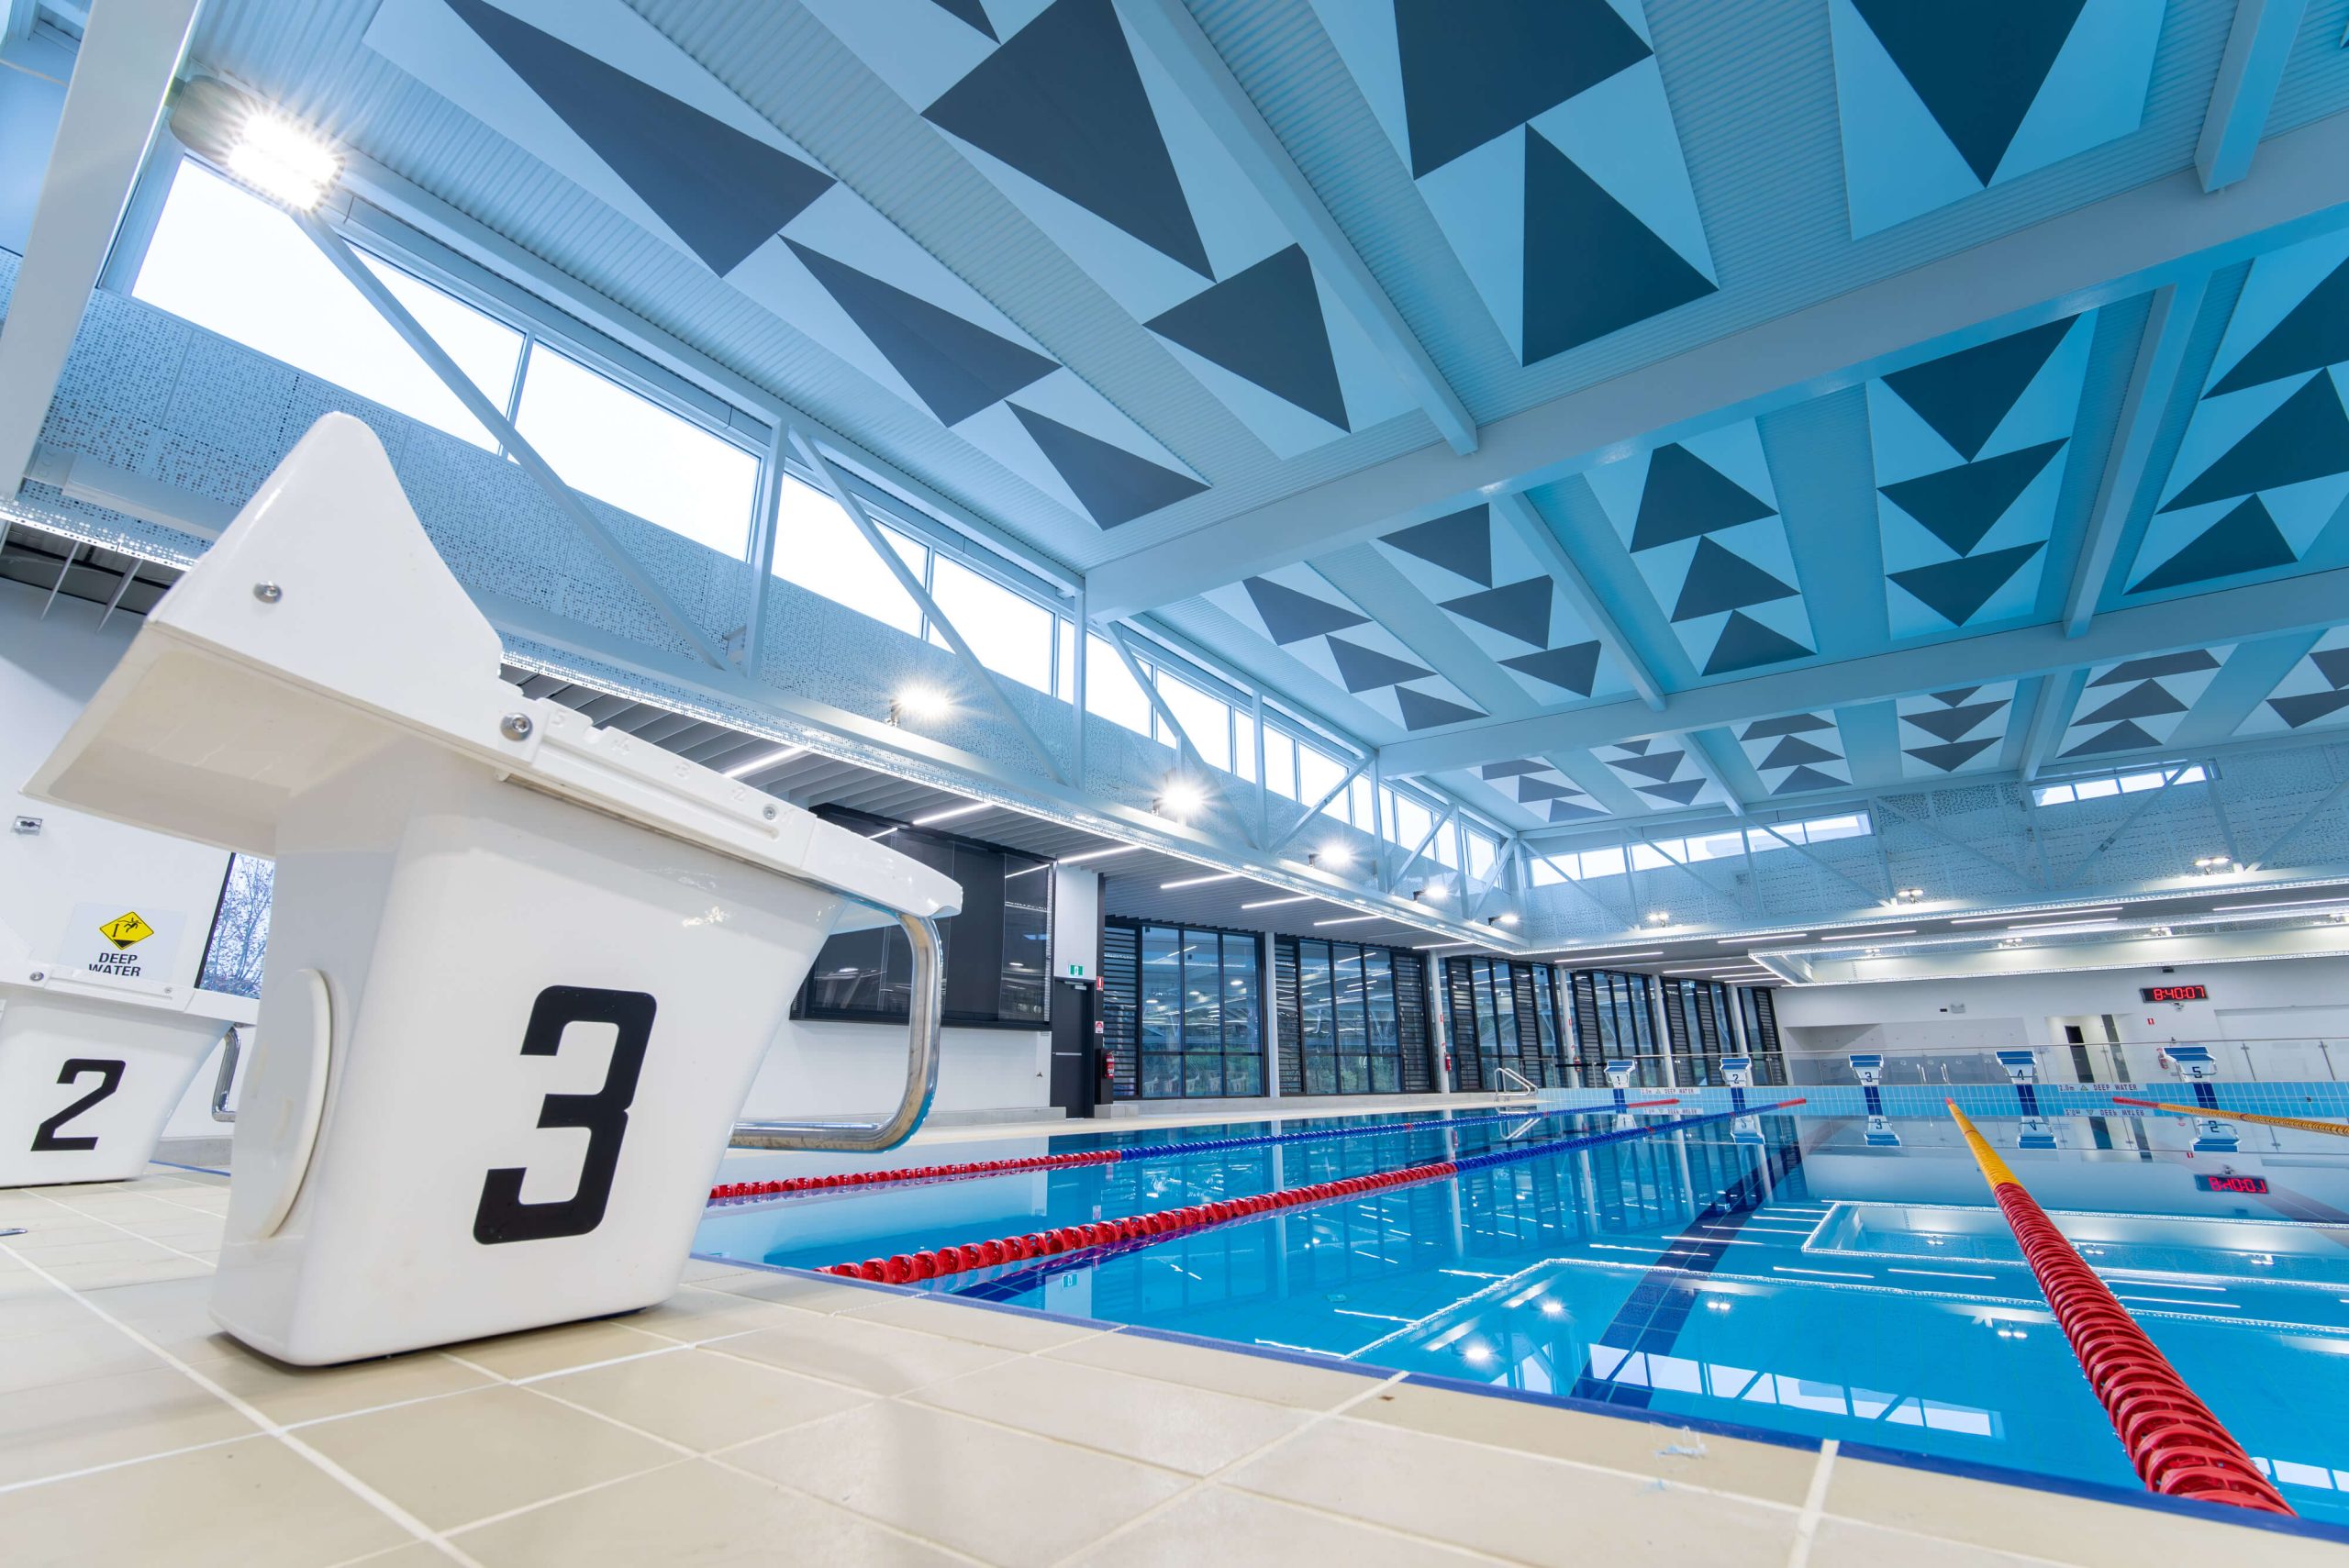 11 tara aquatic centre and sports precinct taylor construction new build education pool dive stand